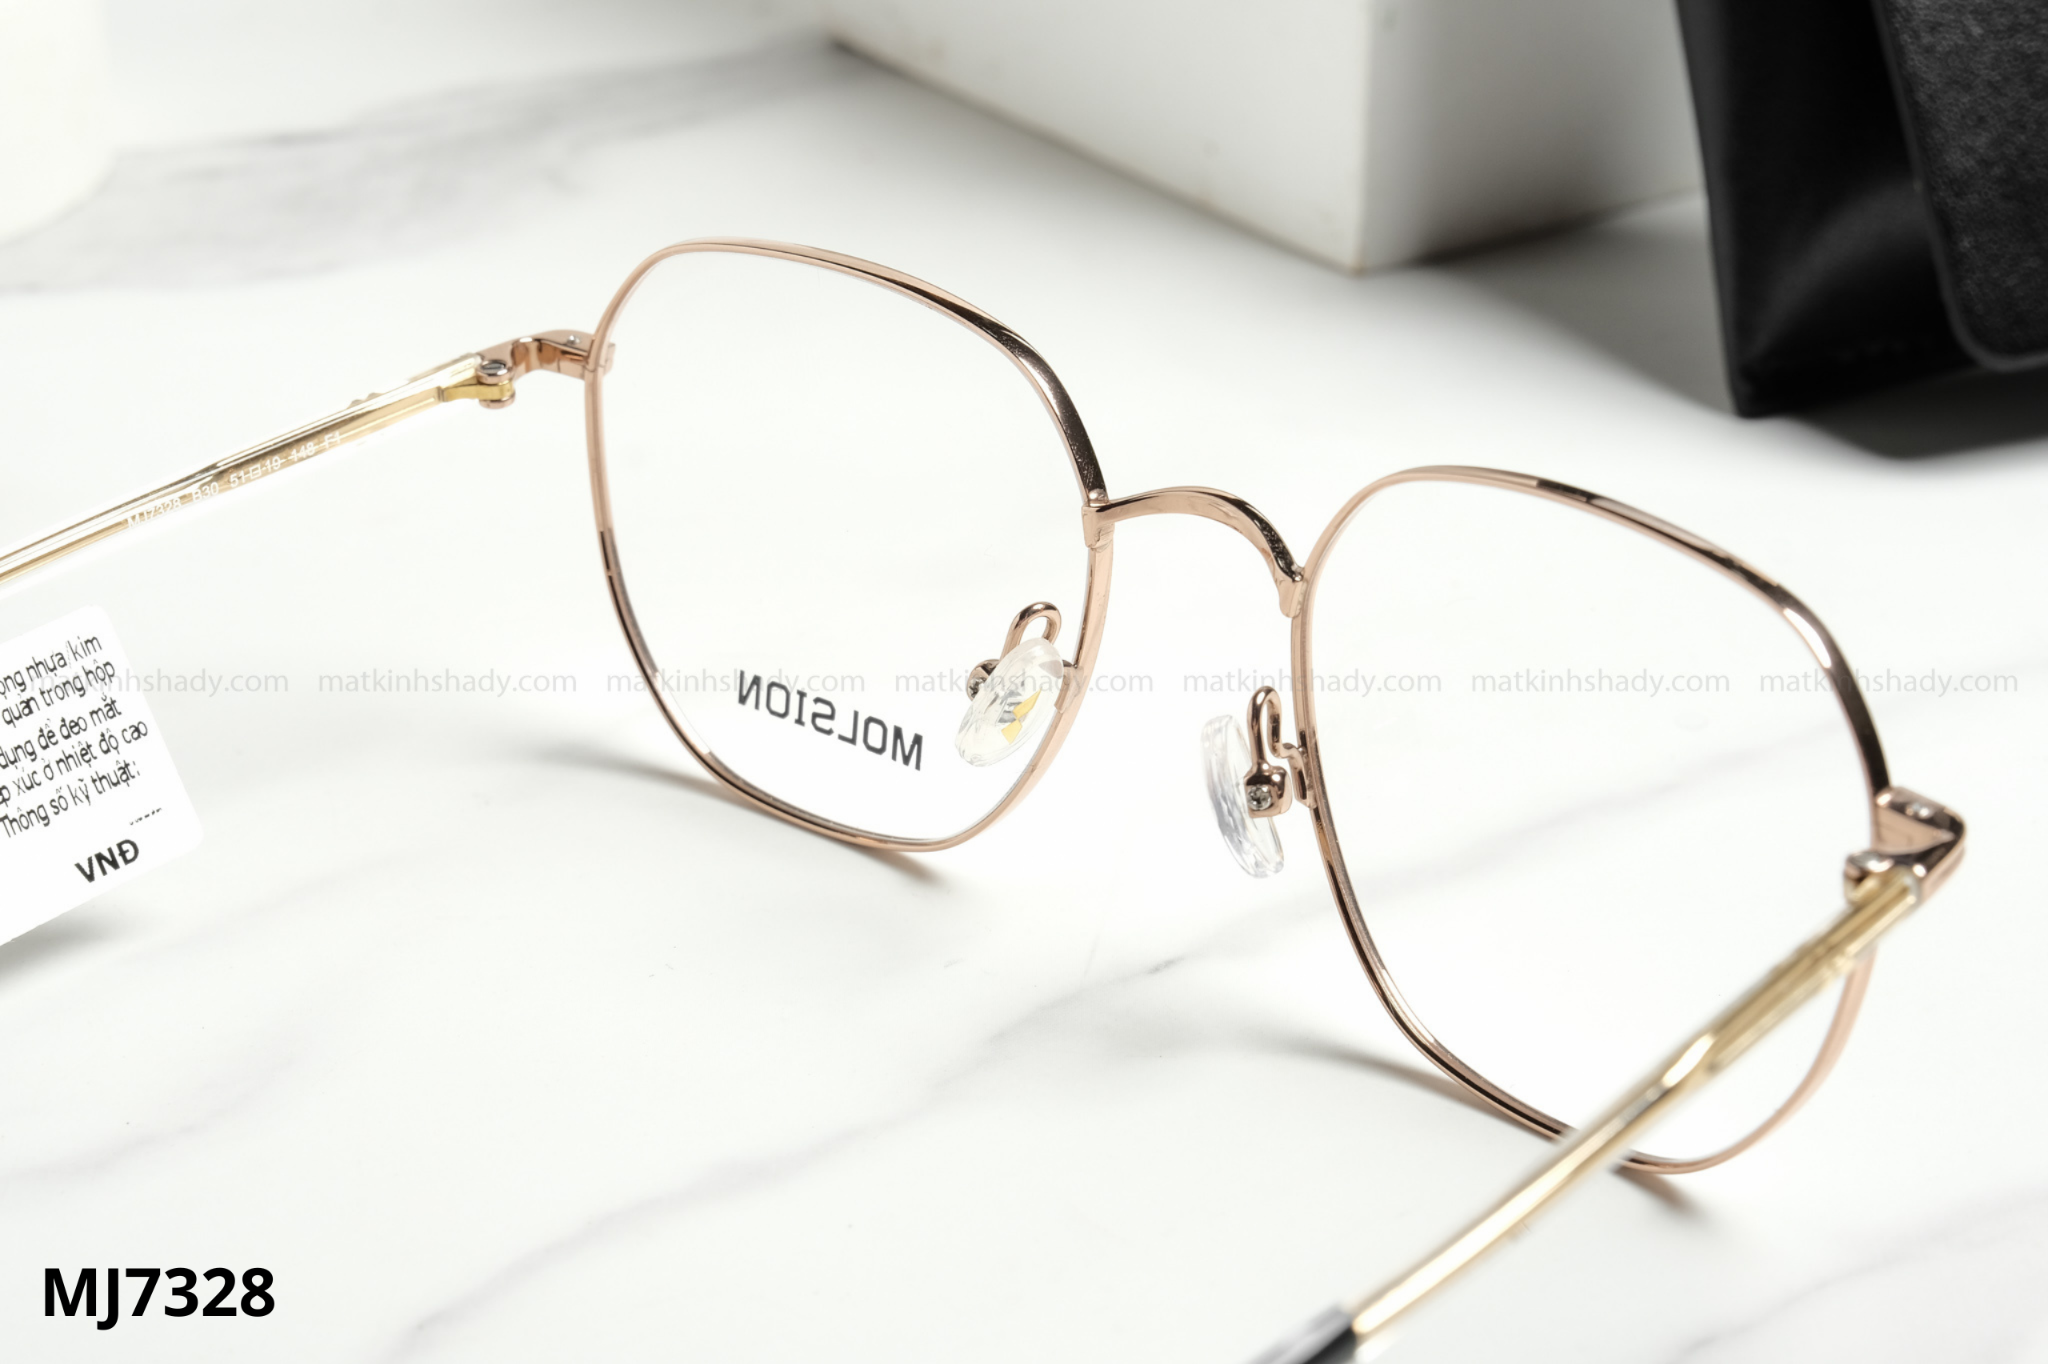  Molsion Eyewear - Glasses - MJ7328 